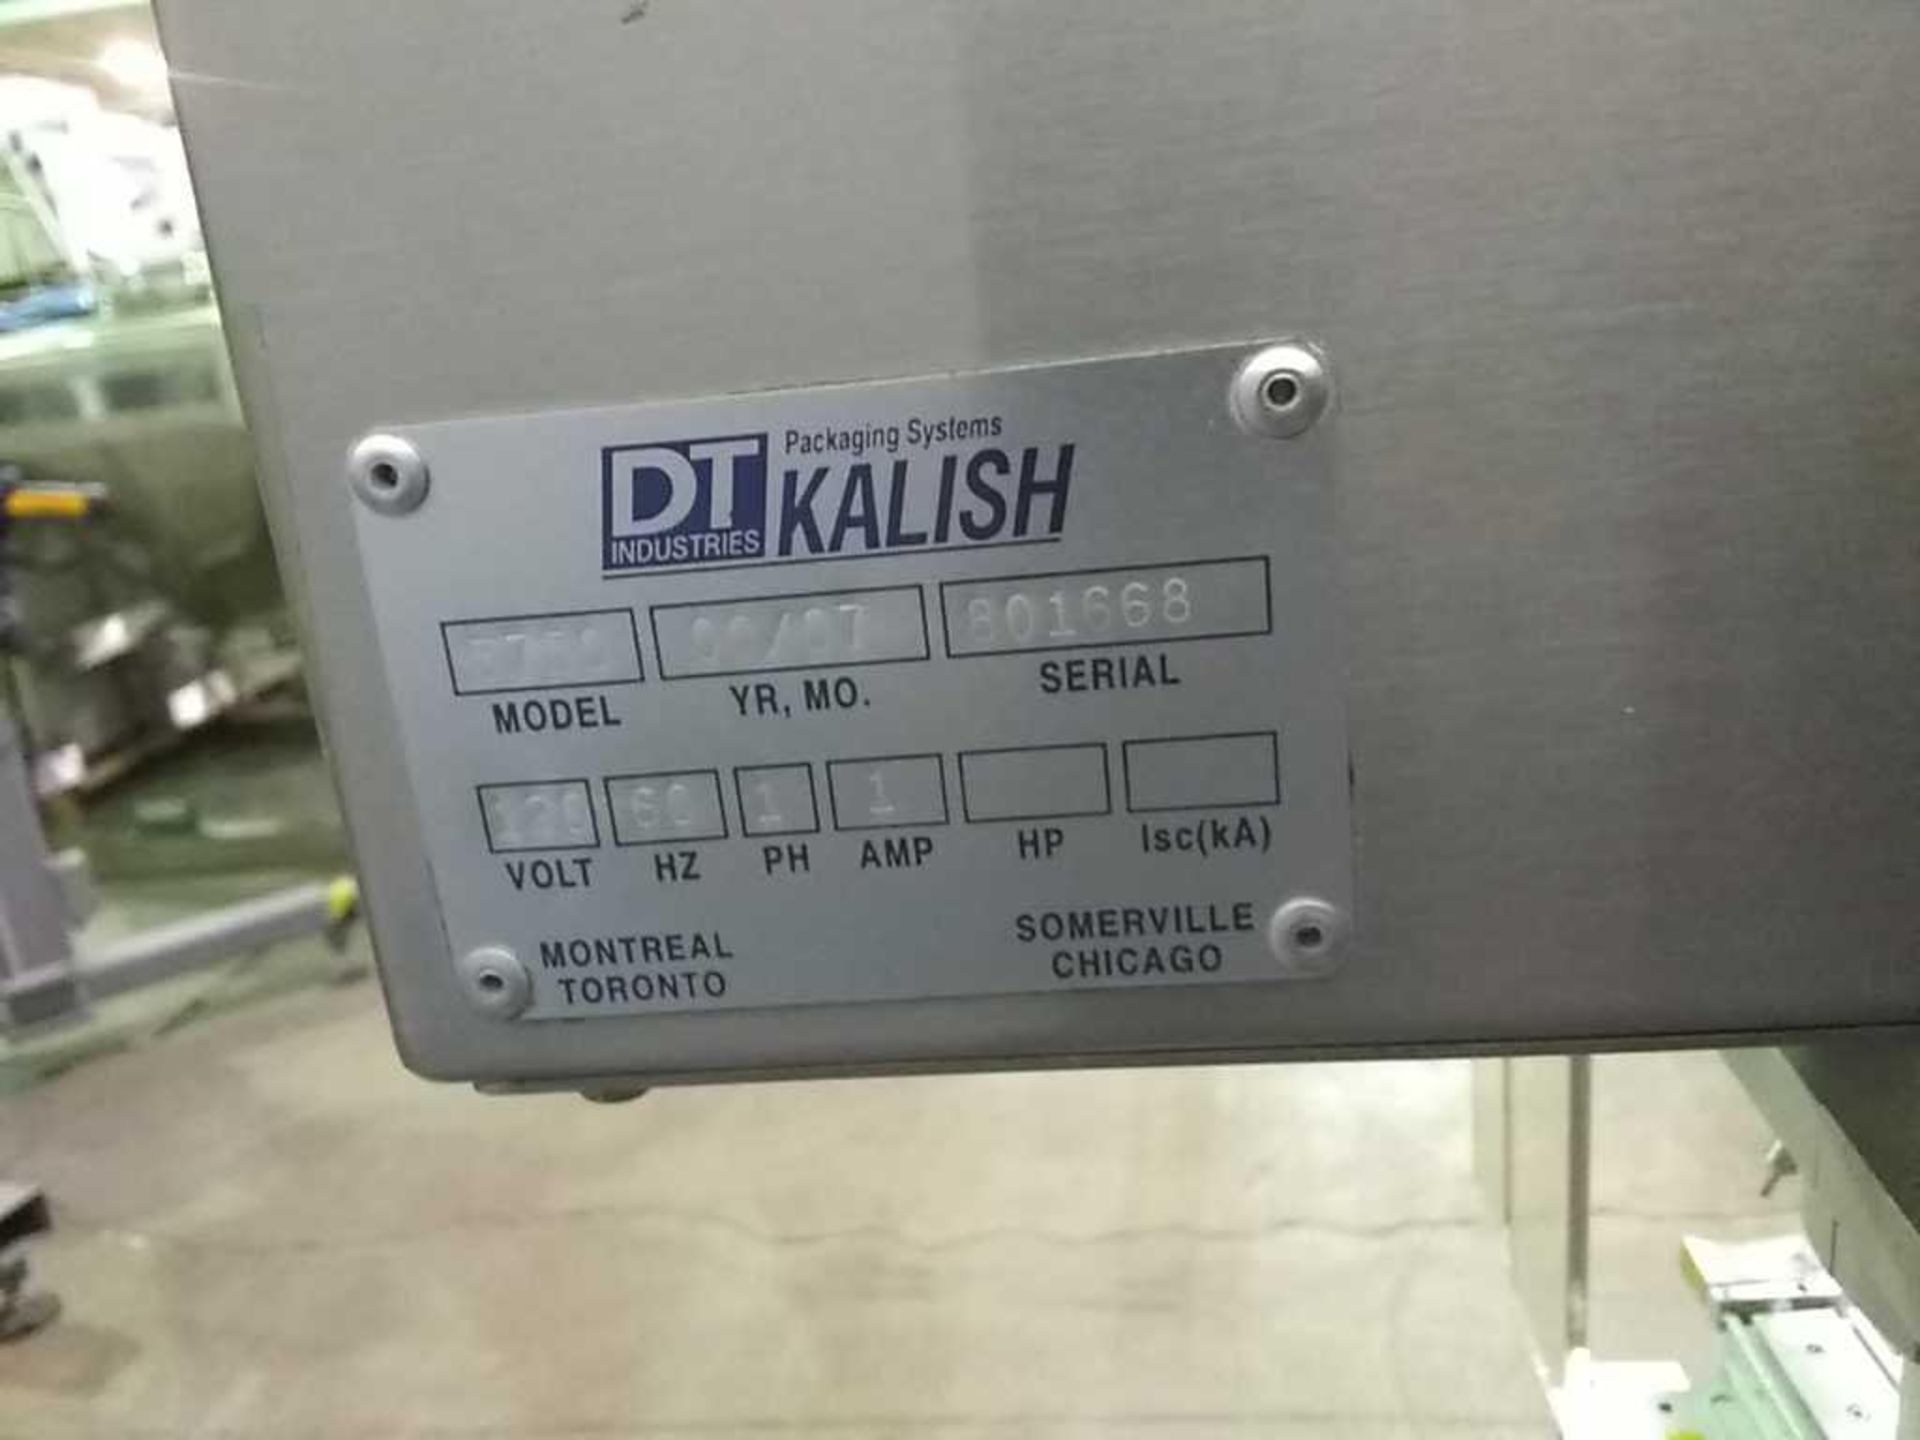 DT Industries Kalish Torqit Cap Retorque Model 5750 Mfd 7/2000 sn 801668, 120V, 1ph, 60Hz, Labeled - Image 4 of 4